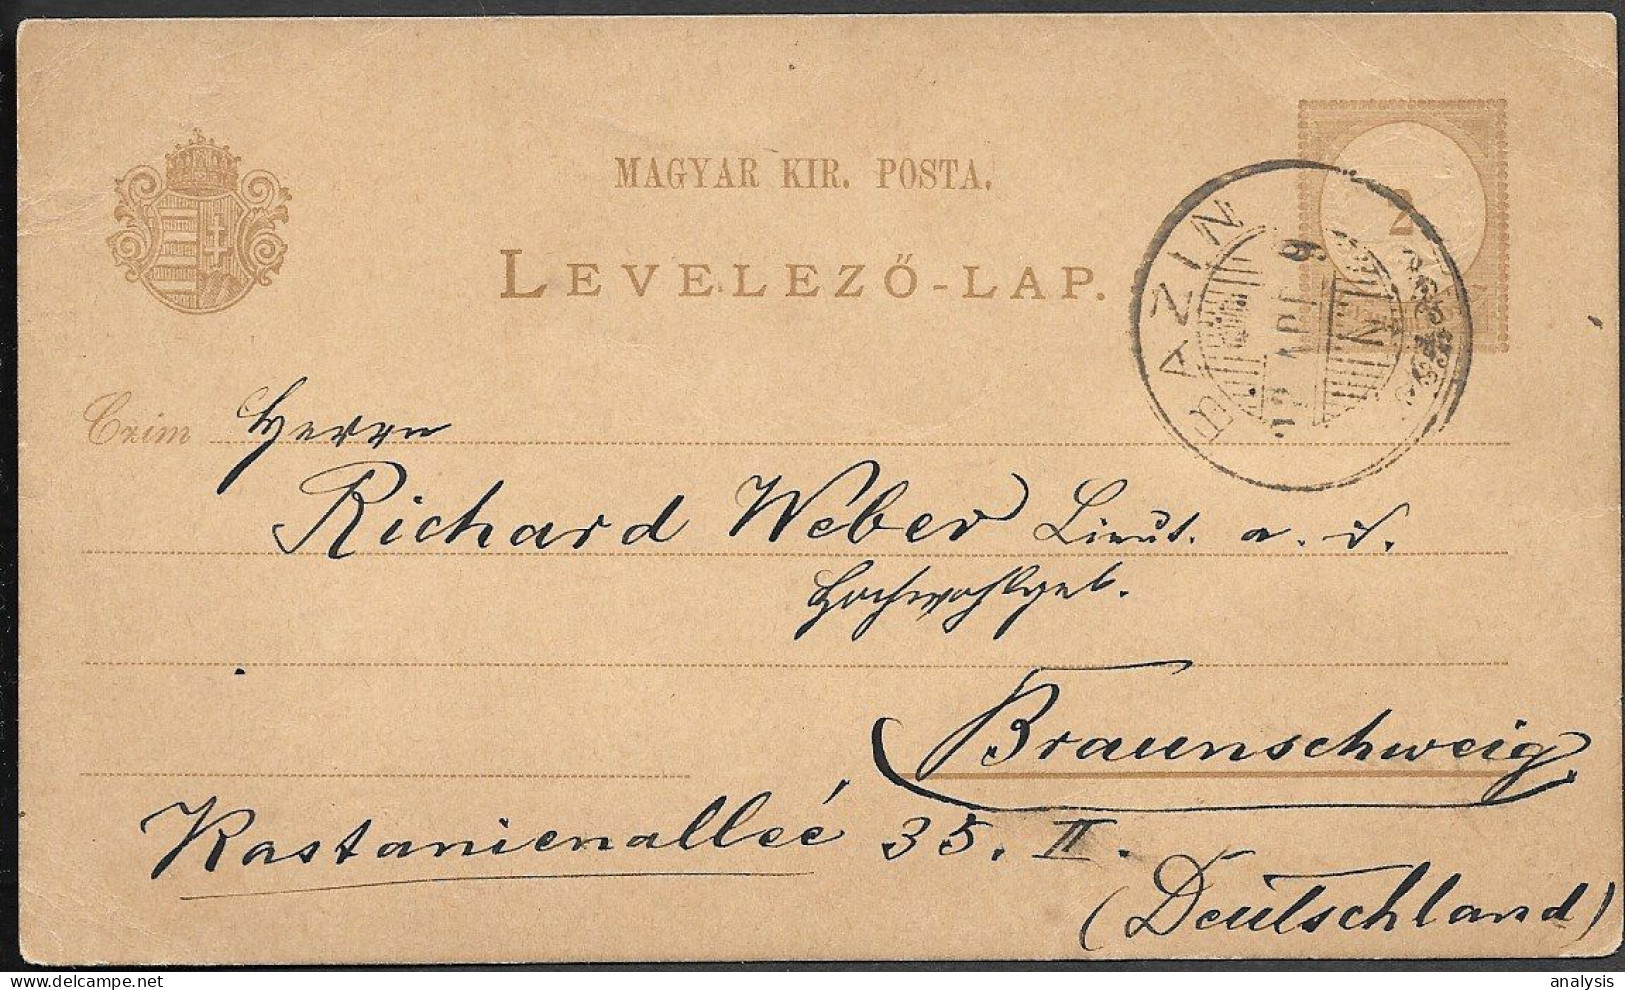 Hungary Slovakia Bazin Postal Stationery Card Mailed To Germany 1893 - Covers & Documents